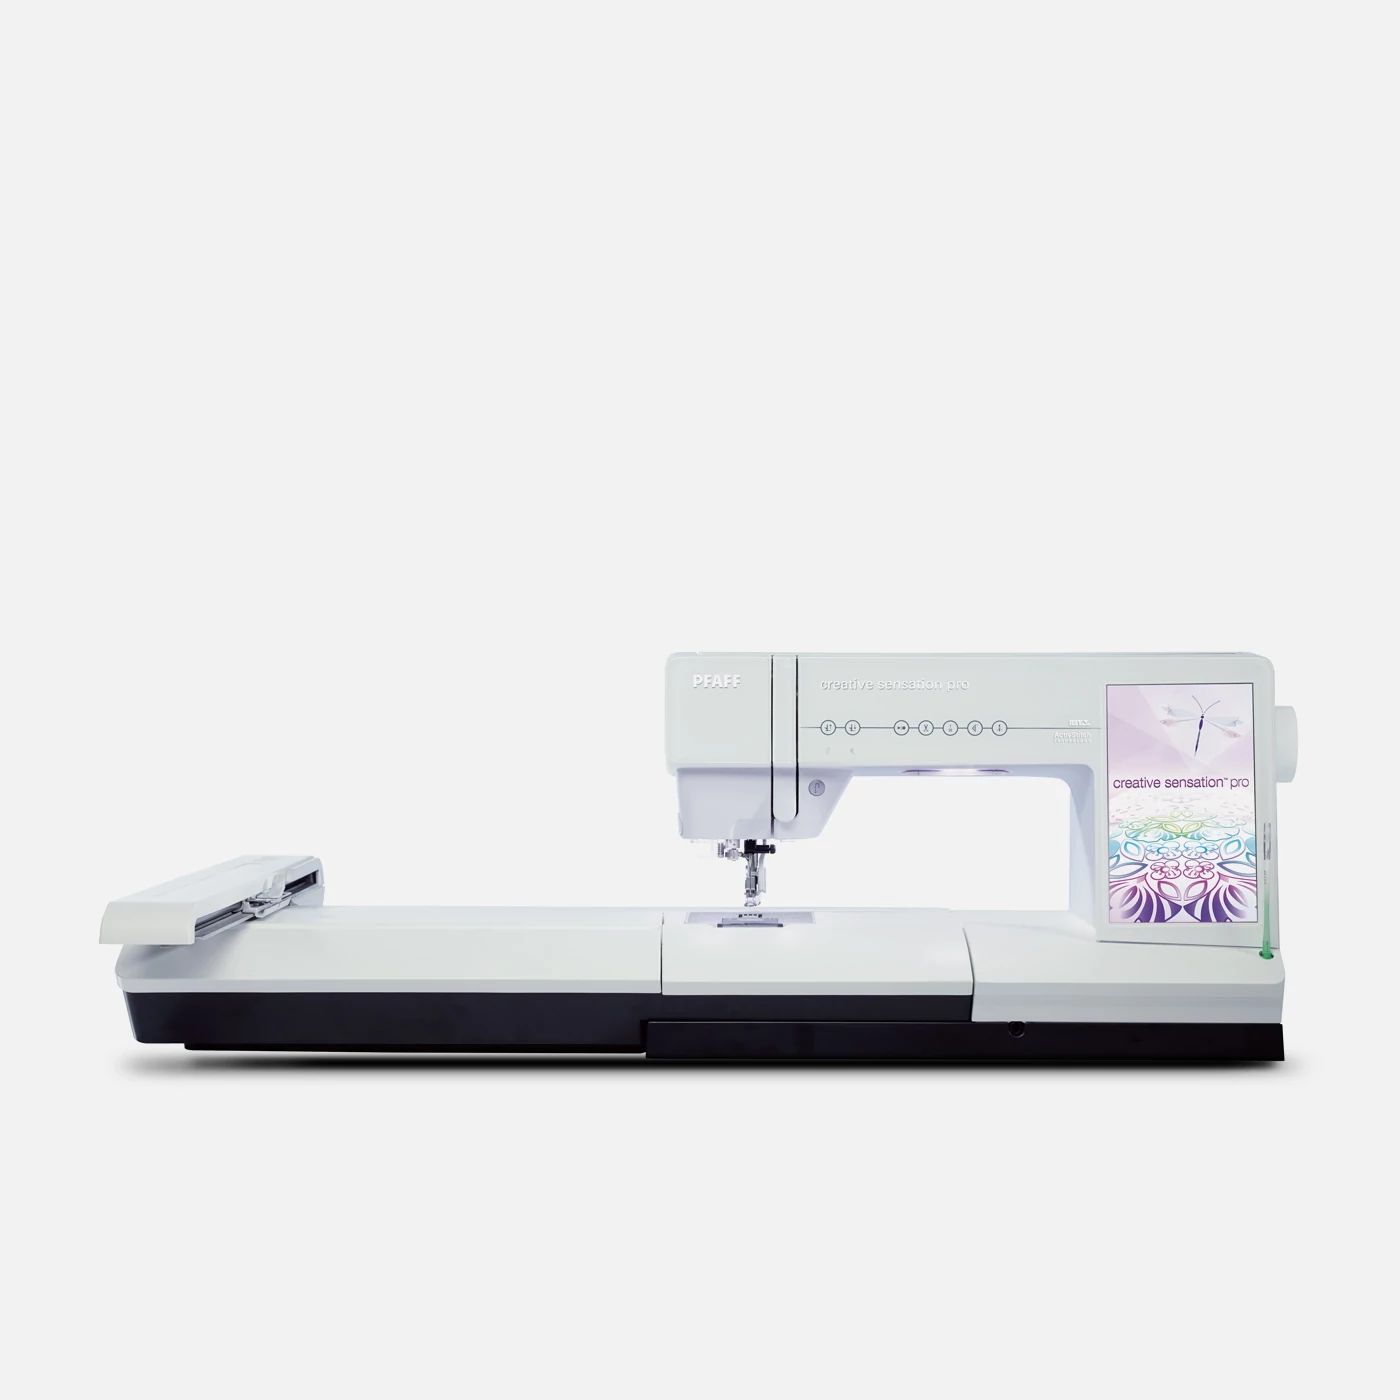 total creative sensation™ pro Sewing Machine